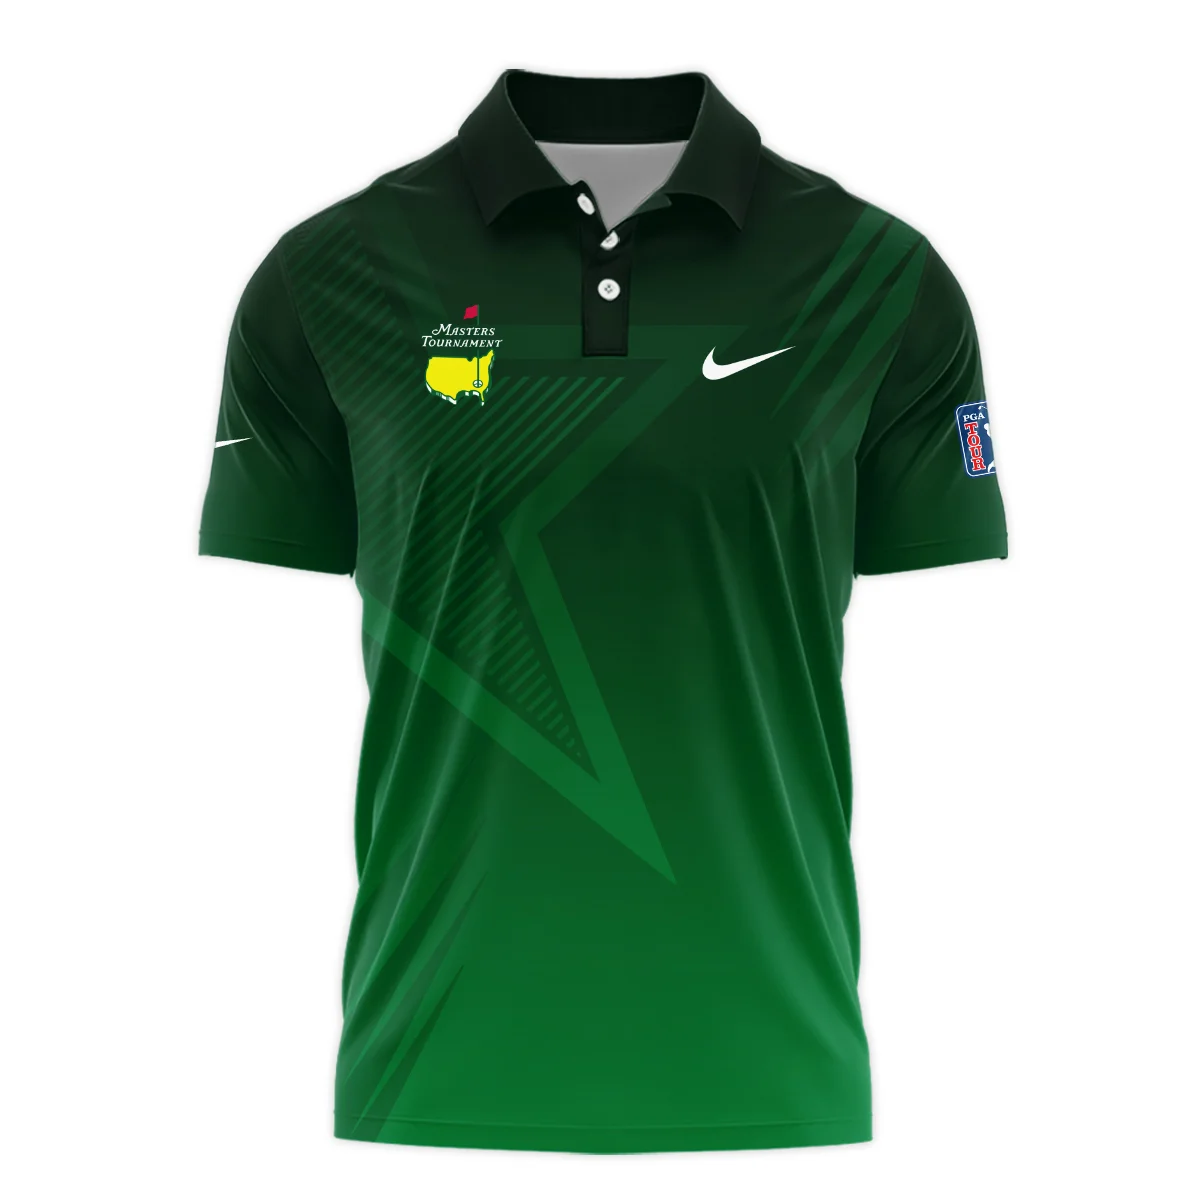 Nike Masters Tournament Polo Shirt Dark Green Gradient Star Pattern Golf Sports Unisex T-Shirt Style Classic T-Shirt